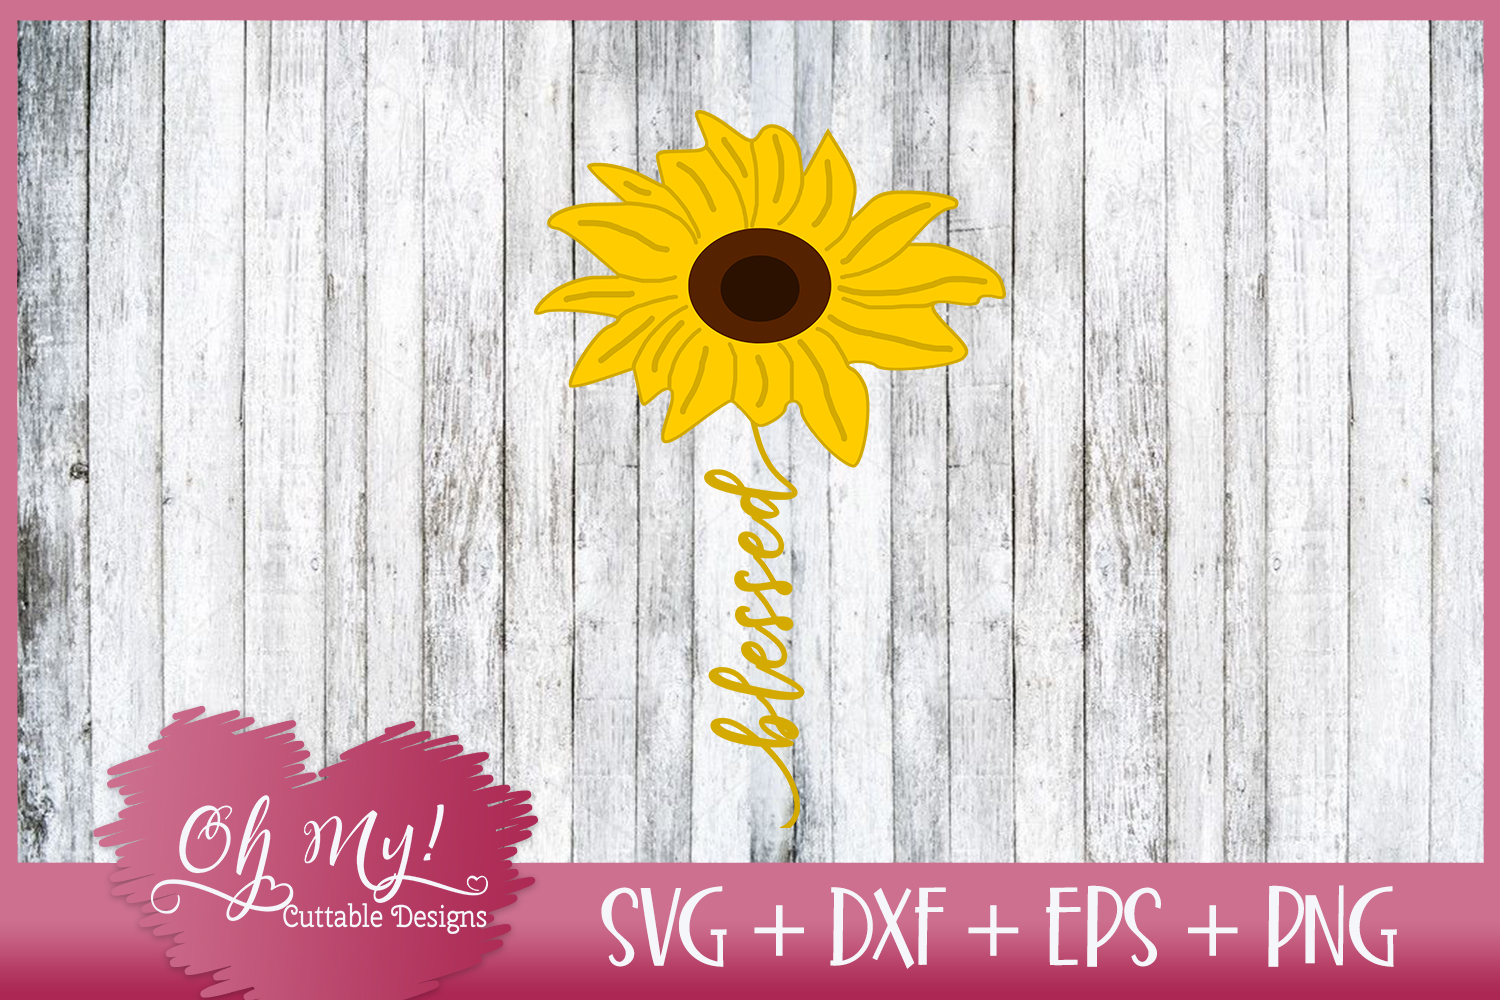 Download Sunflower Svg - Layered SVG Cut File - Free Fonts ...